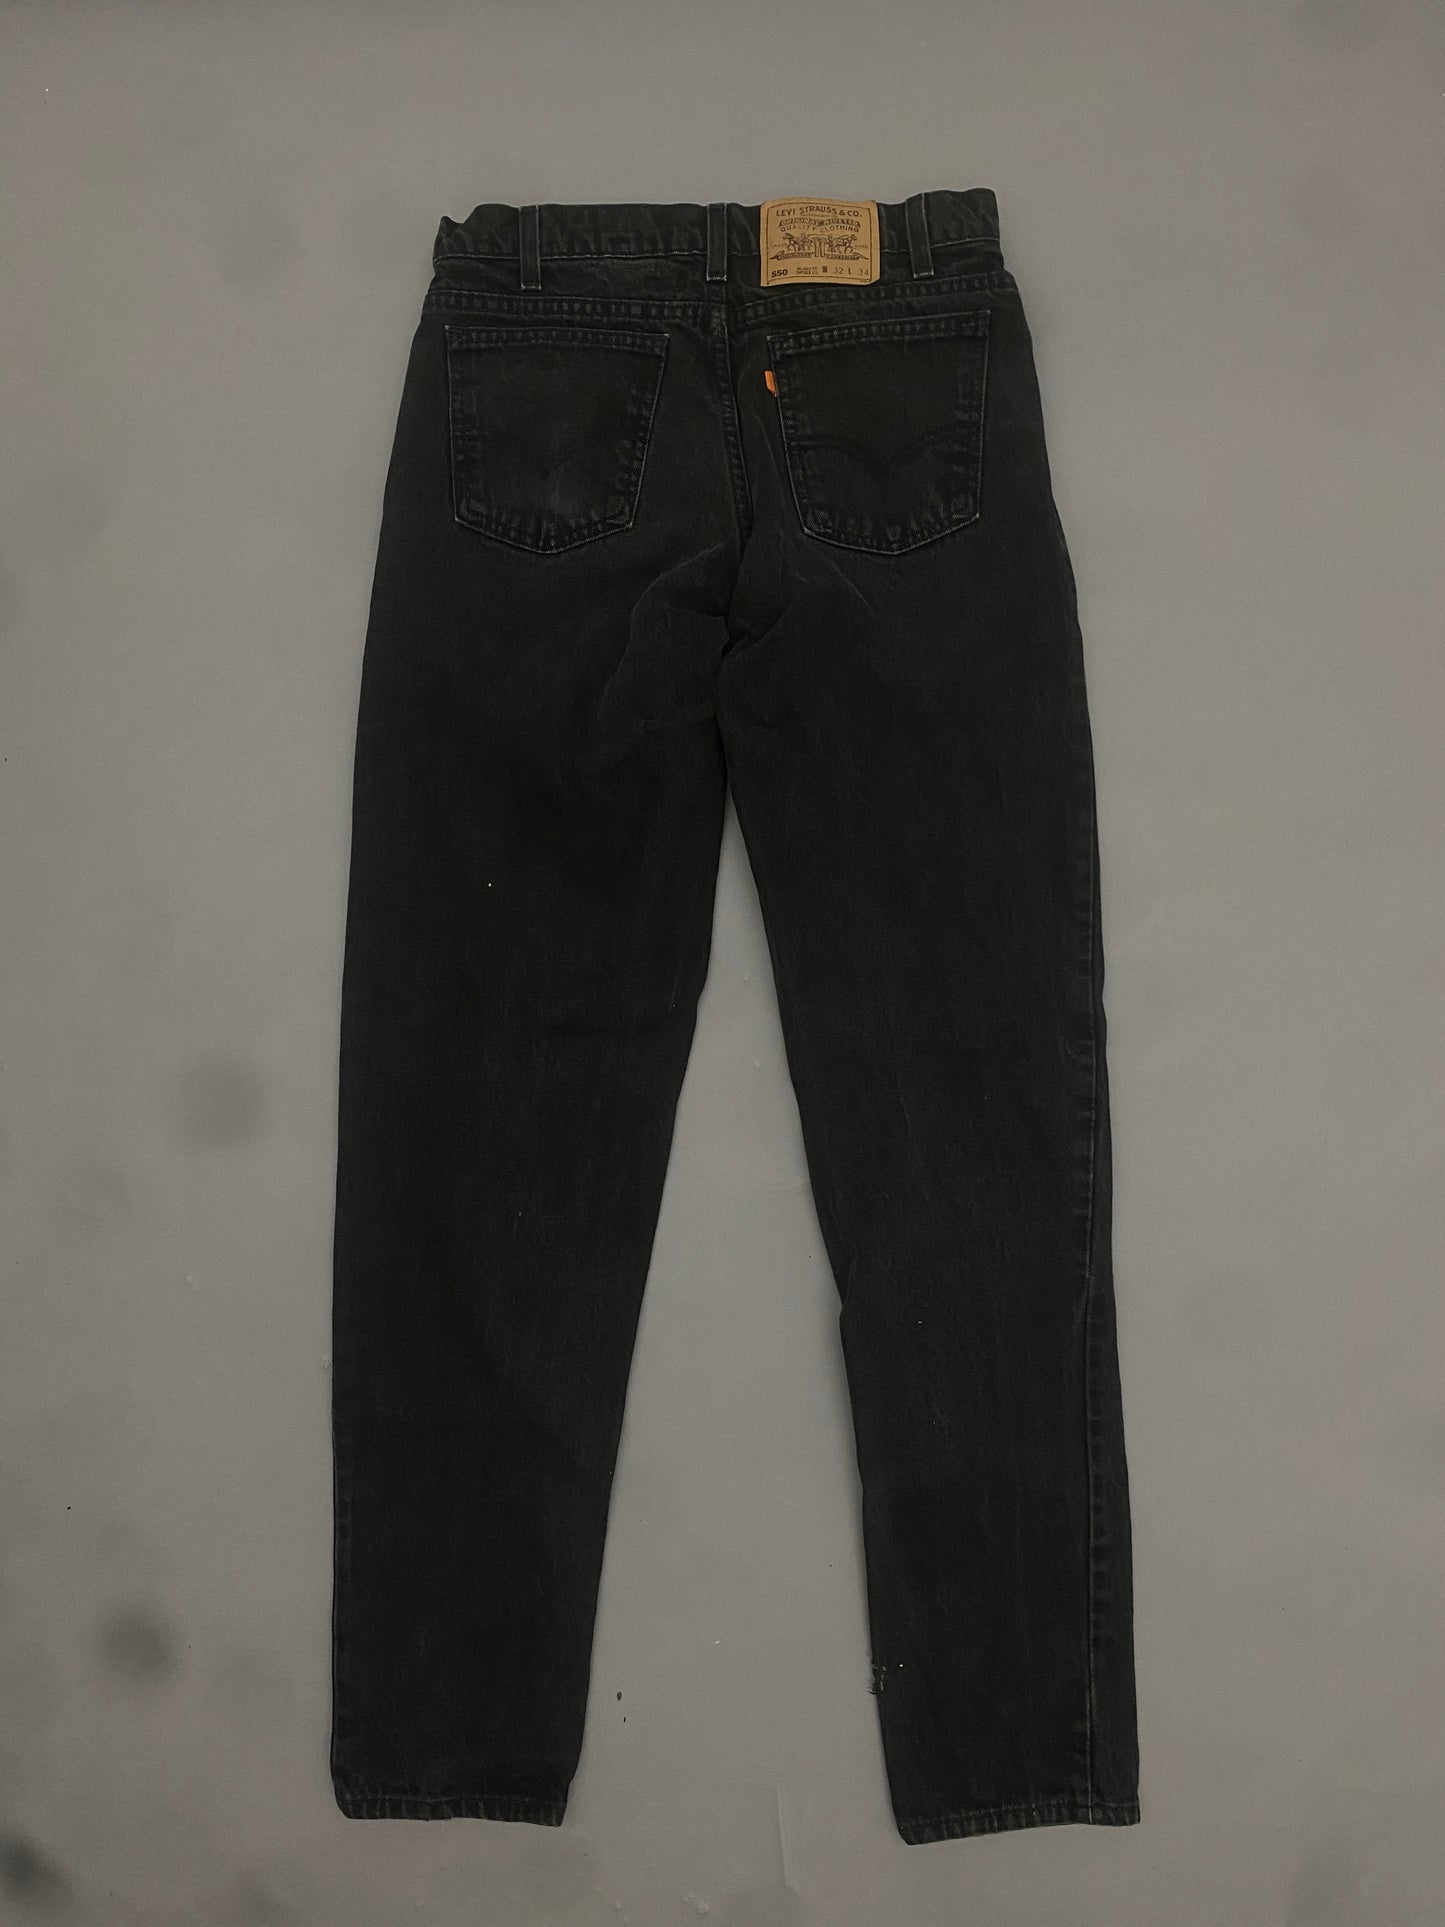 Levis Orange Tab Vintage Jeans - 32x34